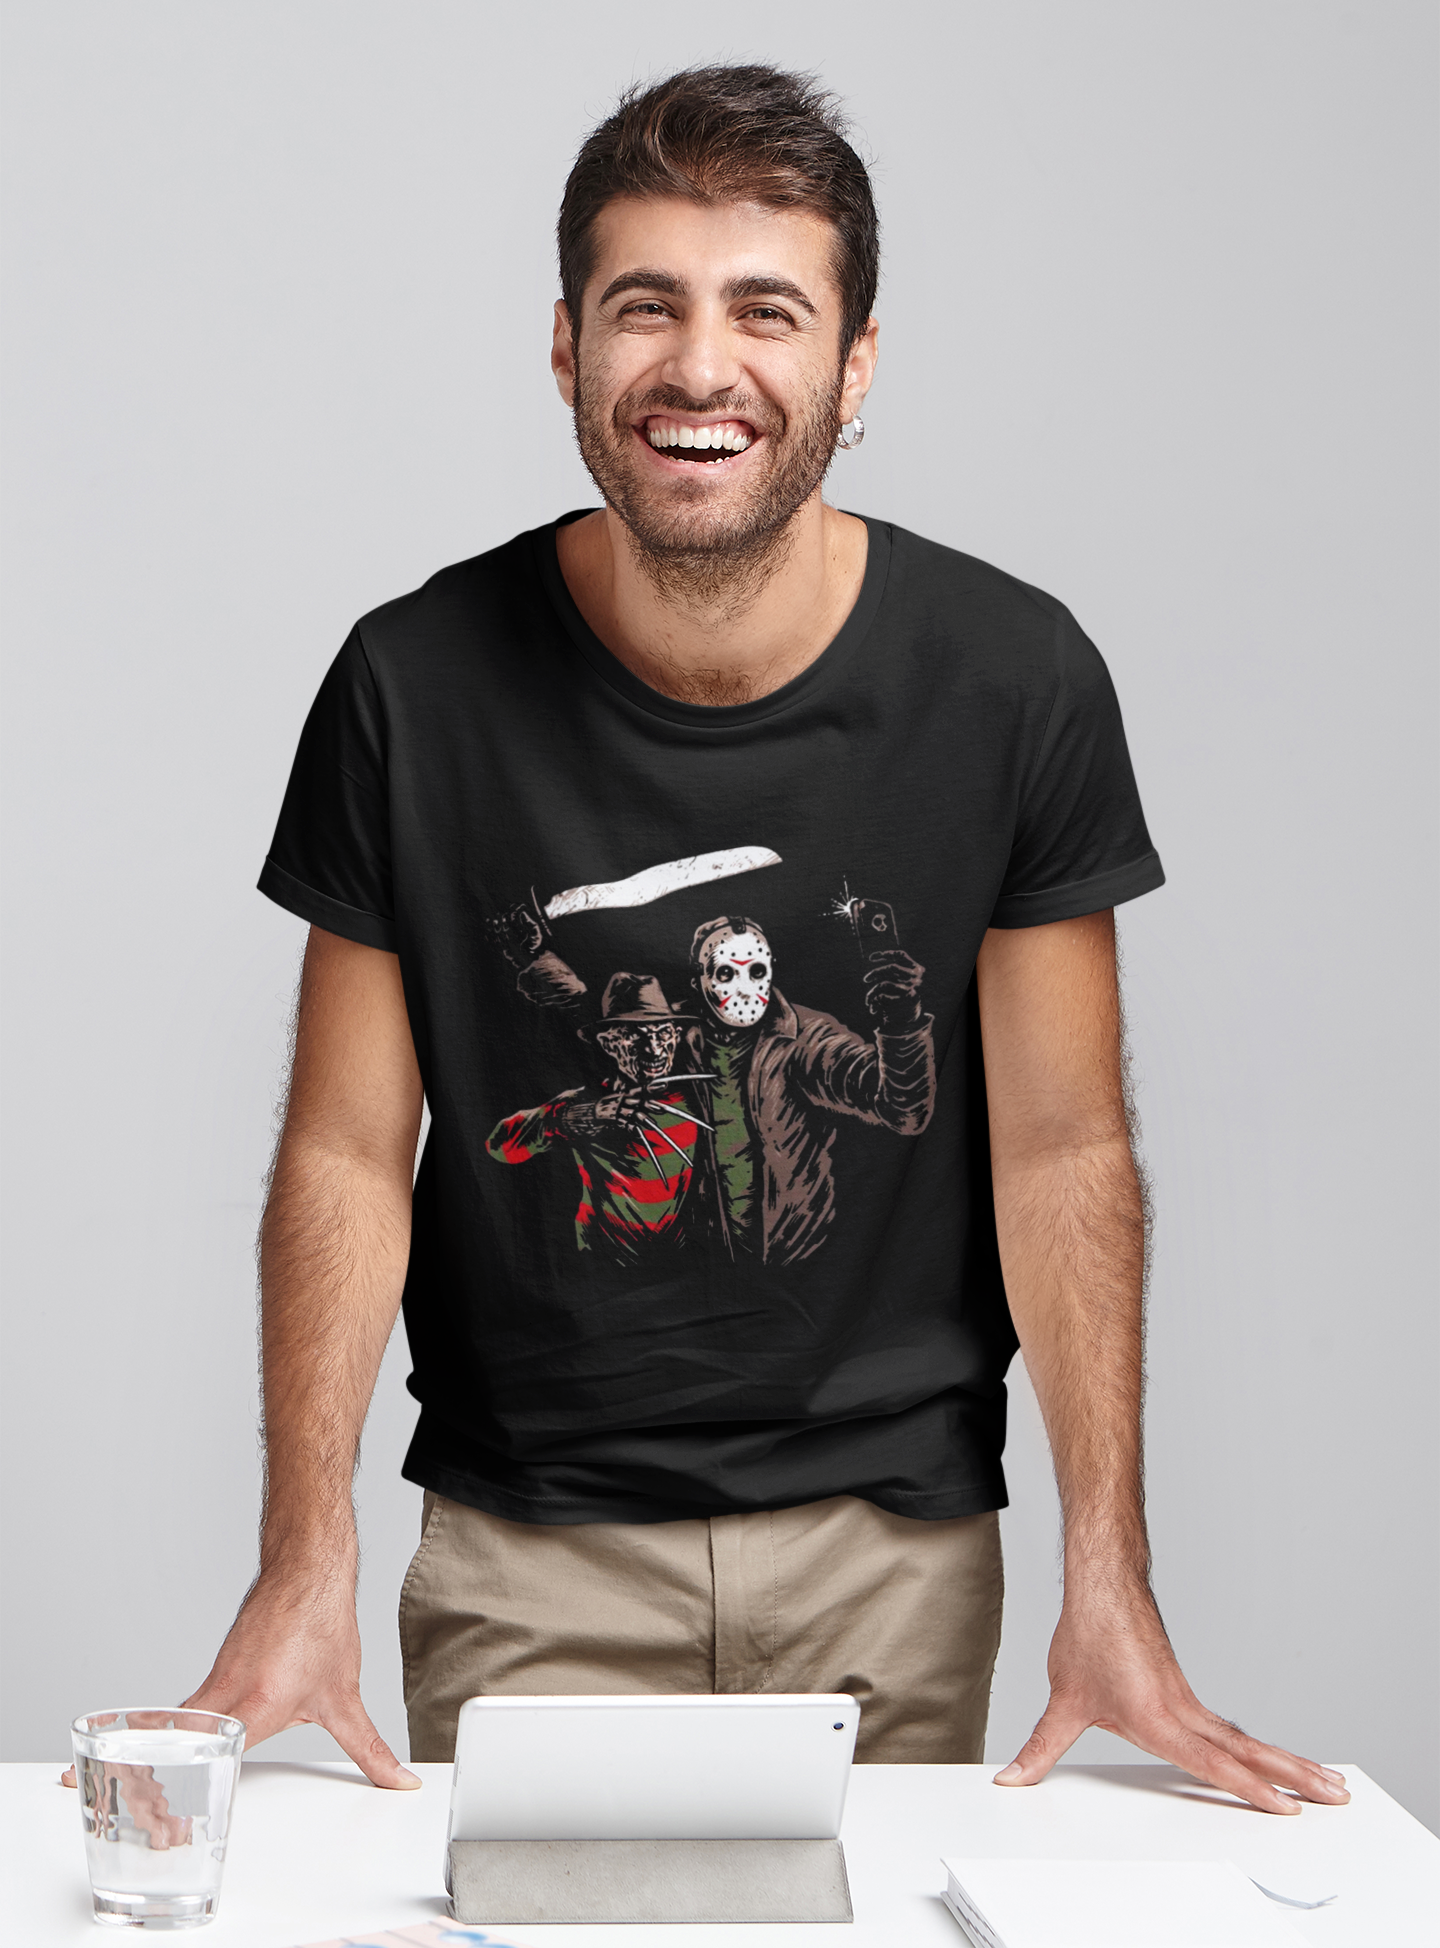 Nightmare On Elm Street T Shirt, Freddy Krueger Jason Voorhees T Shirt, Halloween Gifts